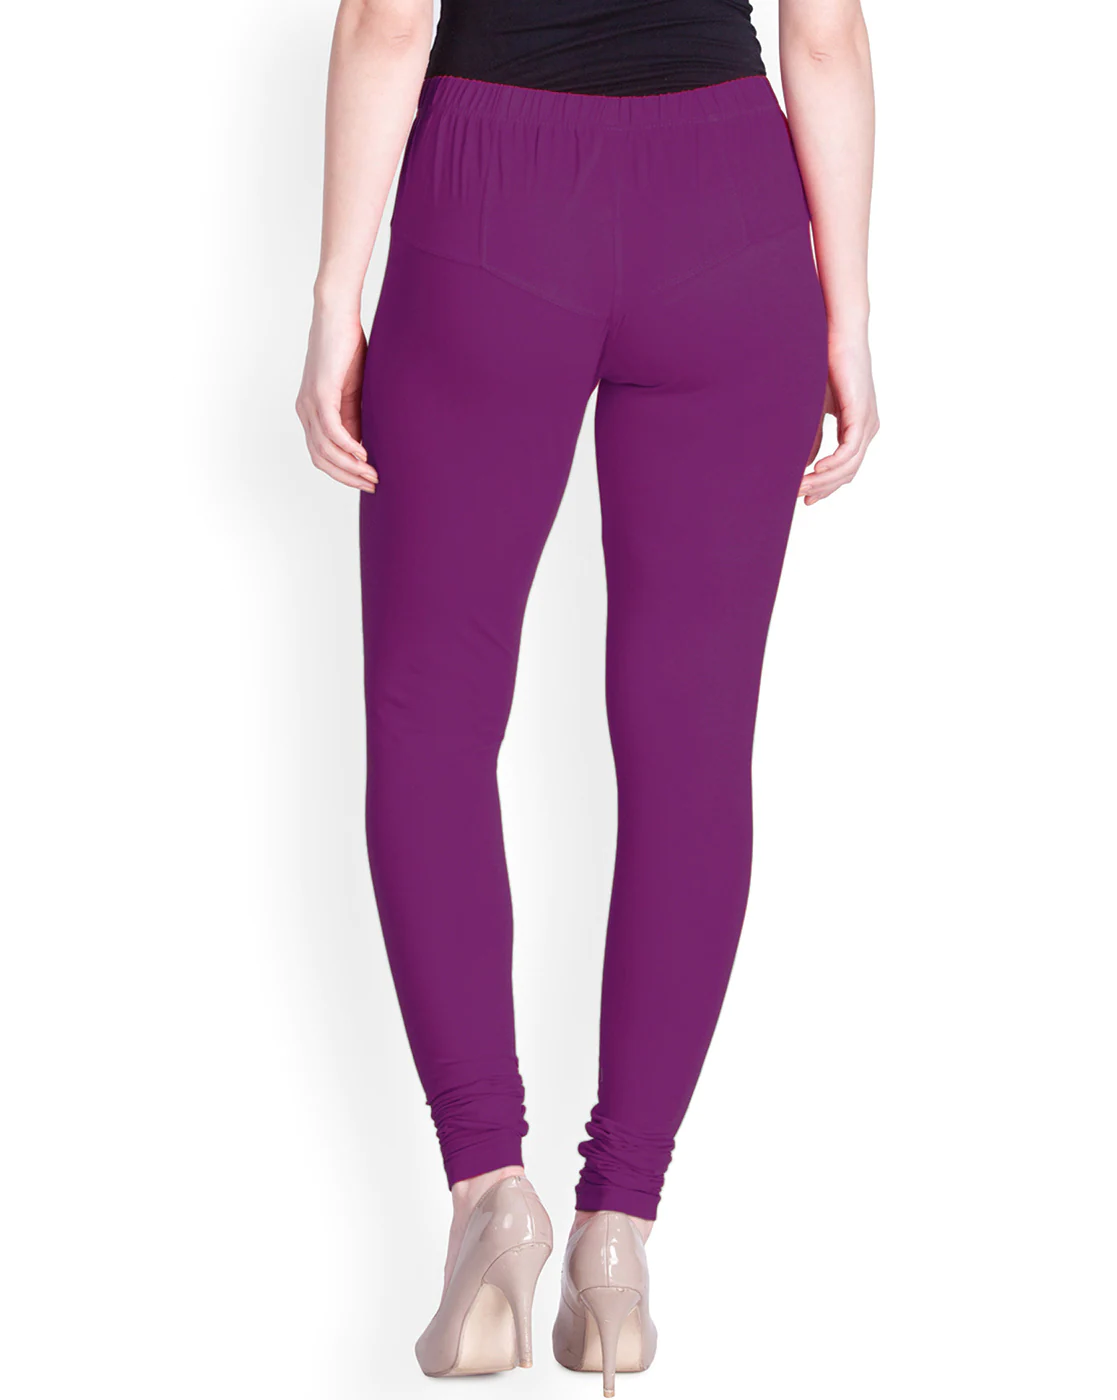 Lyra Purple Churidar Cotton Leggings free Size for Woman - Stilento